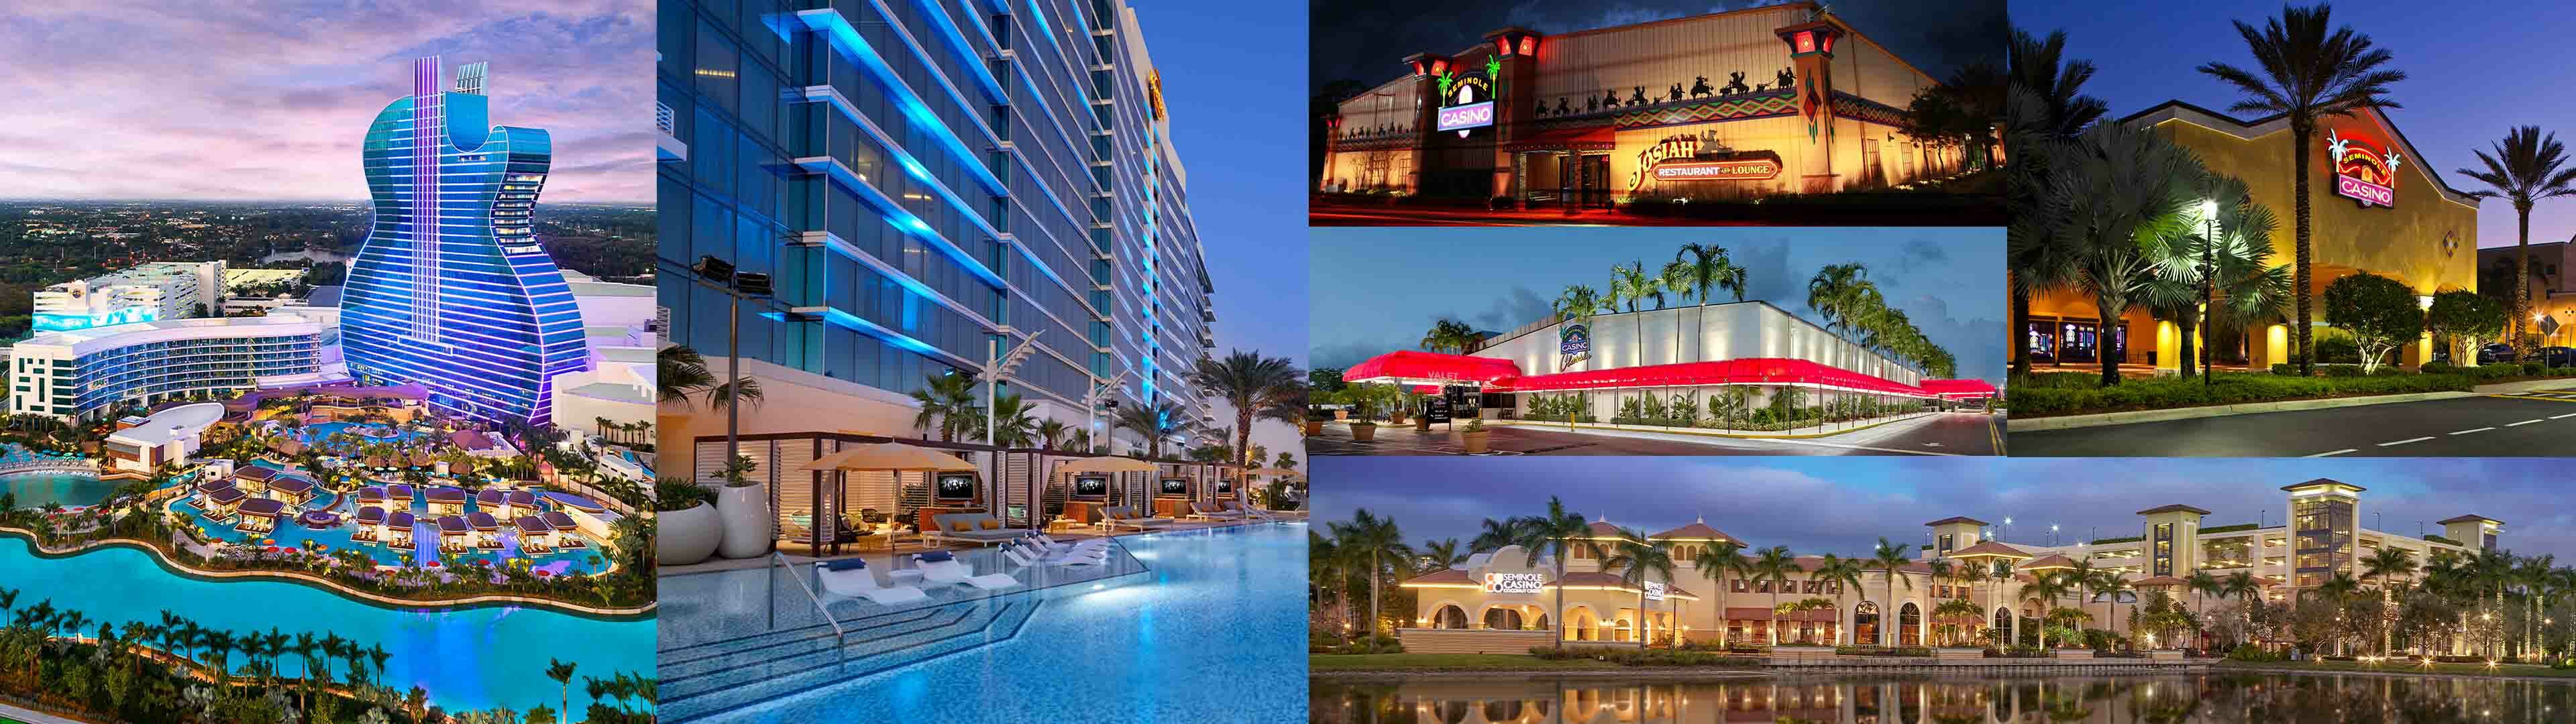 Photo of Hard Rock & Seminole Gaming Casinos, Hollywood, FL